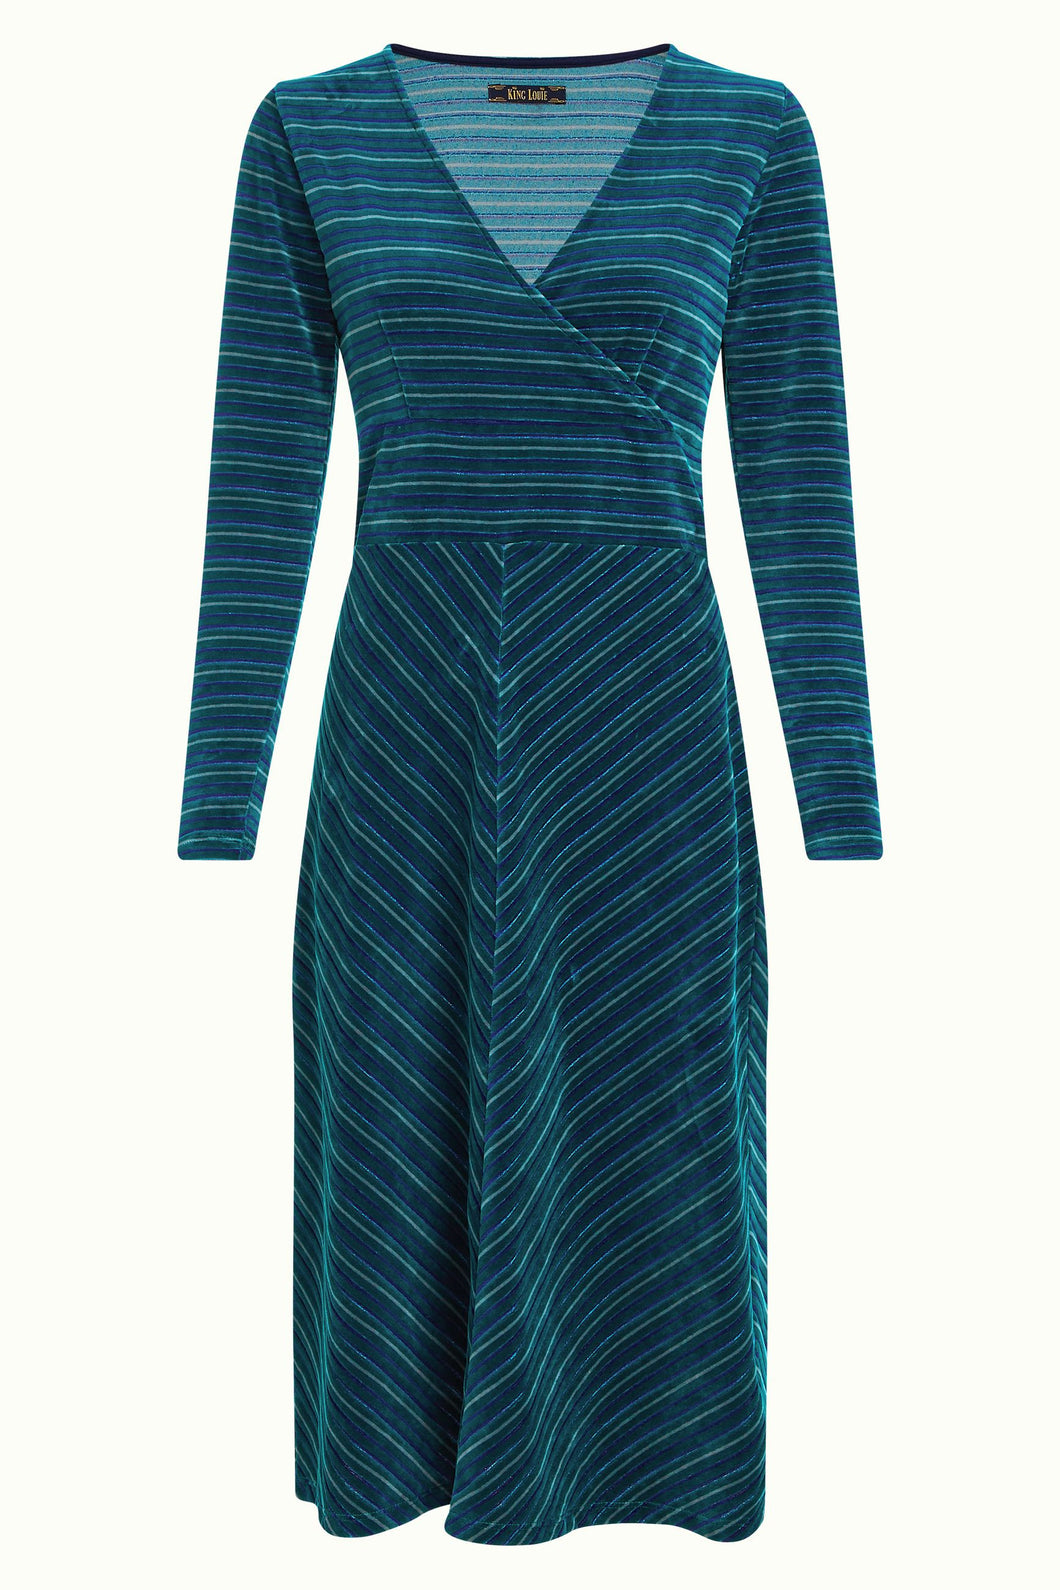 Kleid King Louie, Style: Lot Midi Dress Moda Stripe, Farbe: 305 – Lapis Blue, *New in*